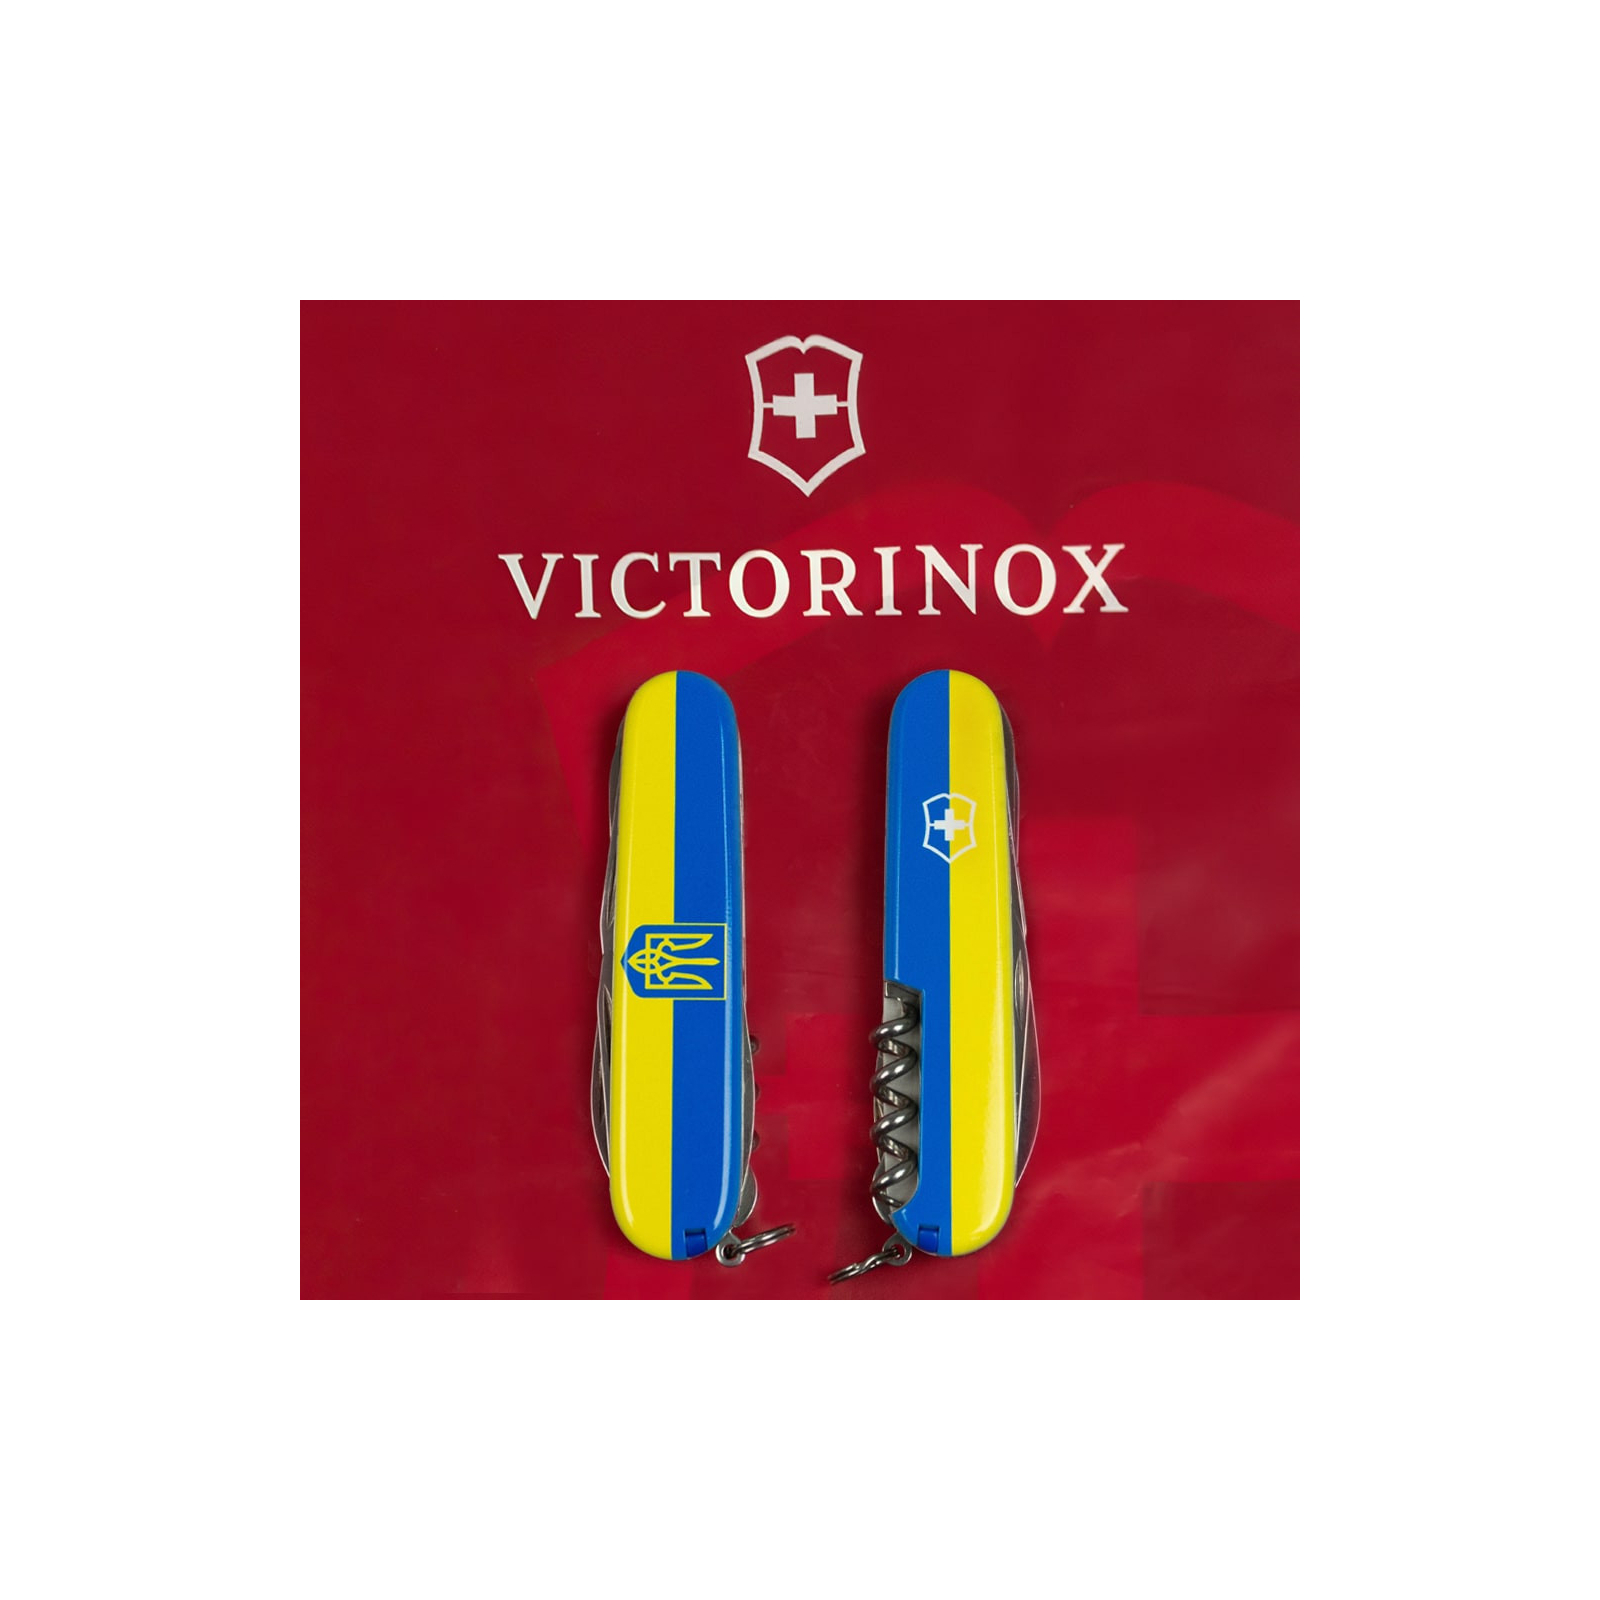 Нож Victorinox Huntsman Ukraine 91 мм Жовто-синій малюнок (1.3713.7_T3100p) изображение 11